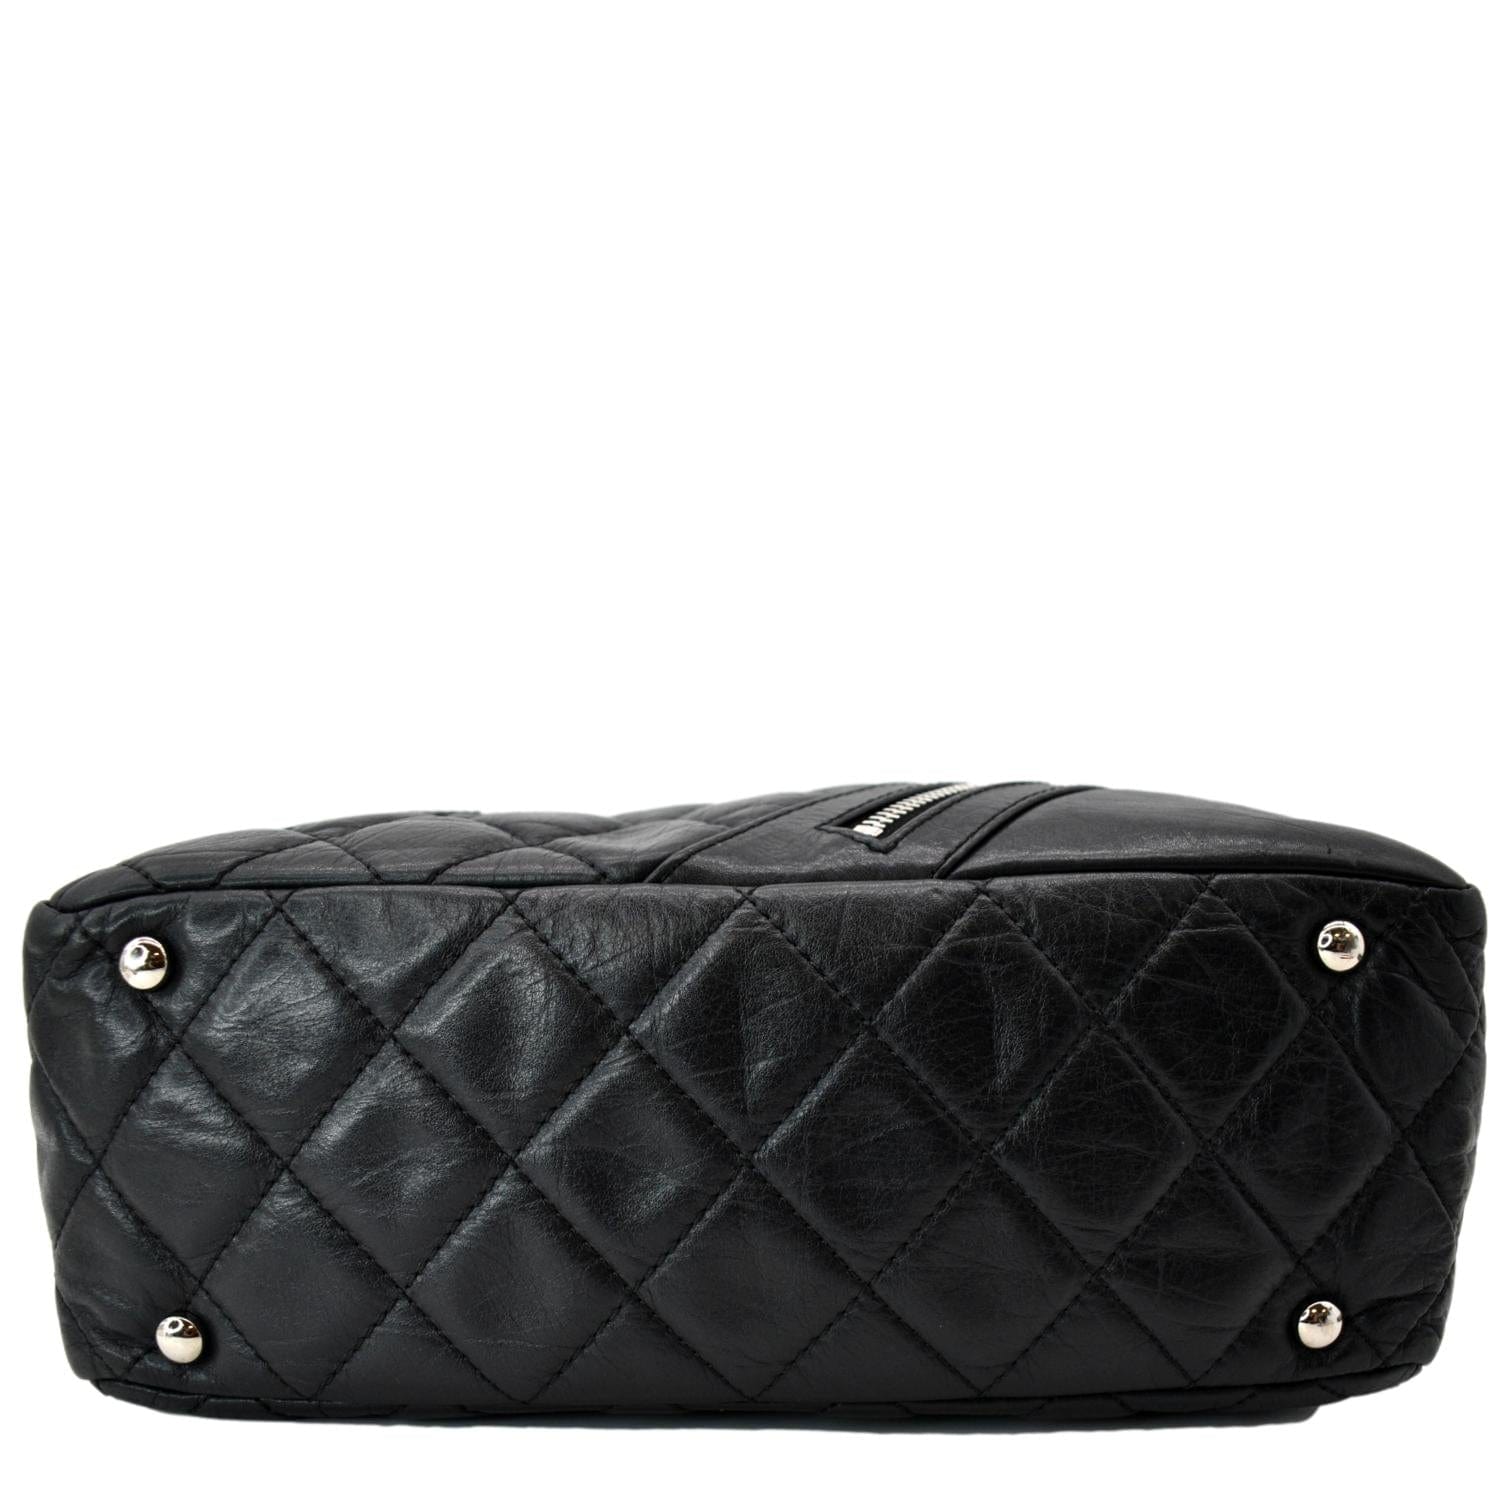 Chanel shoulder bag ladies black leather chain